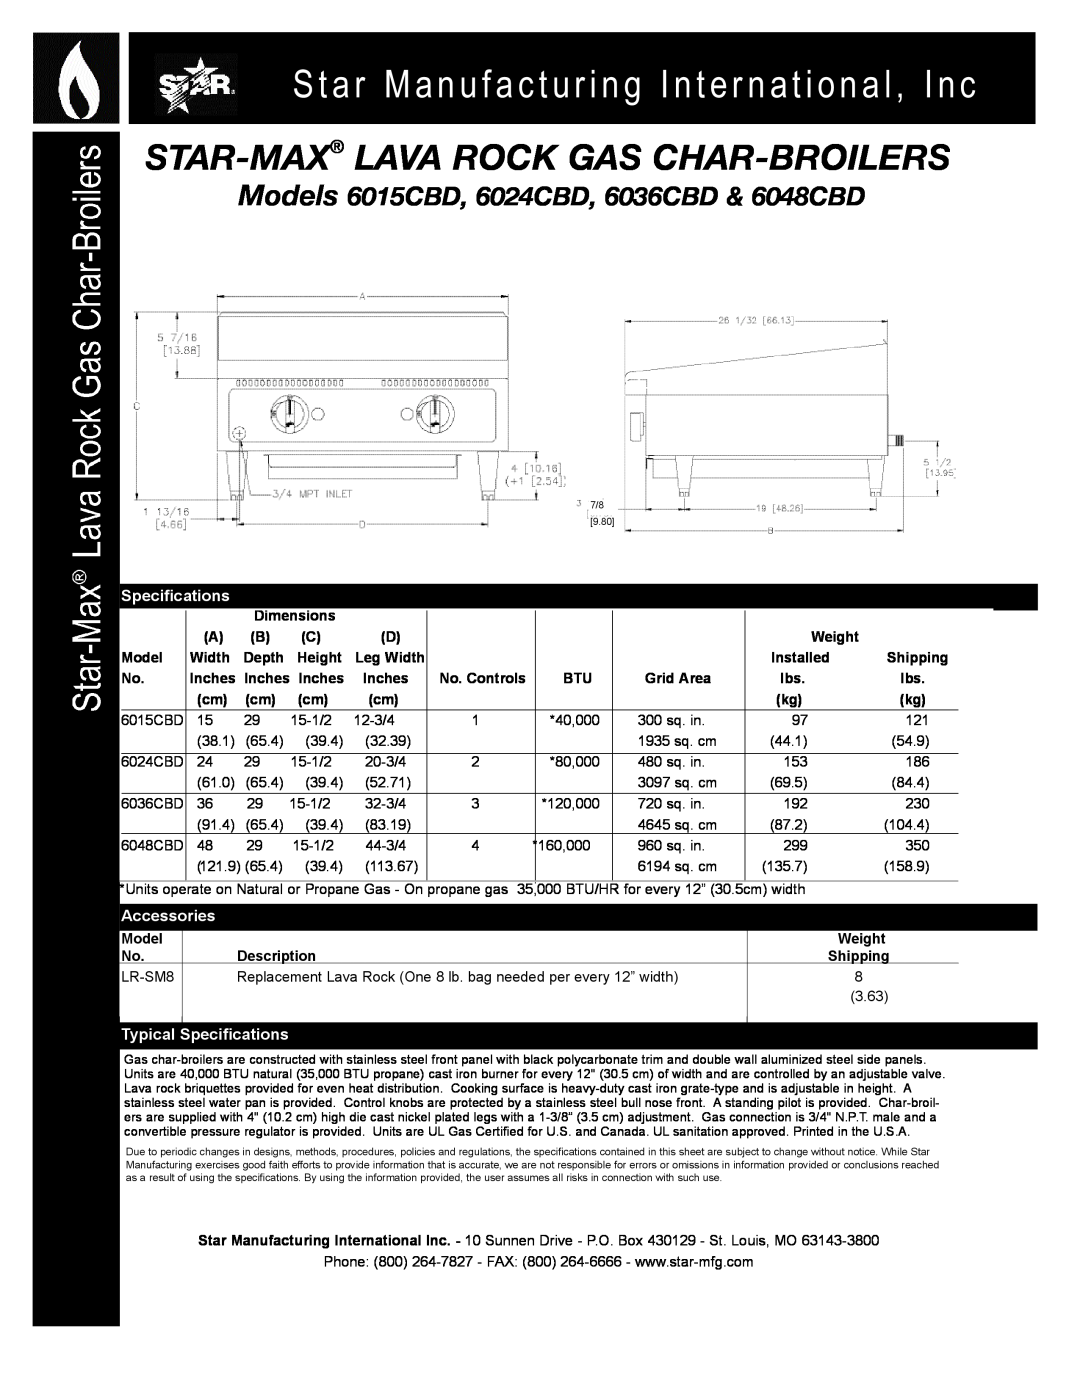 Star Manufacturing Star-Max Lava Rock Gas Char-Broilers, Models 6015CBD, 6024CBD, 6036CBD & 6048CBD, Specifications 